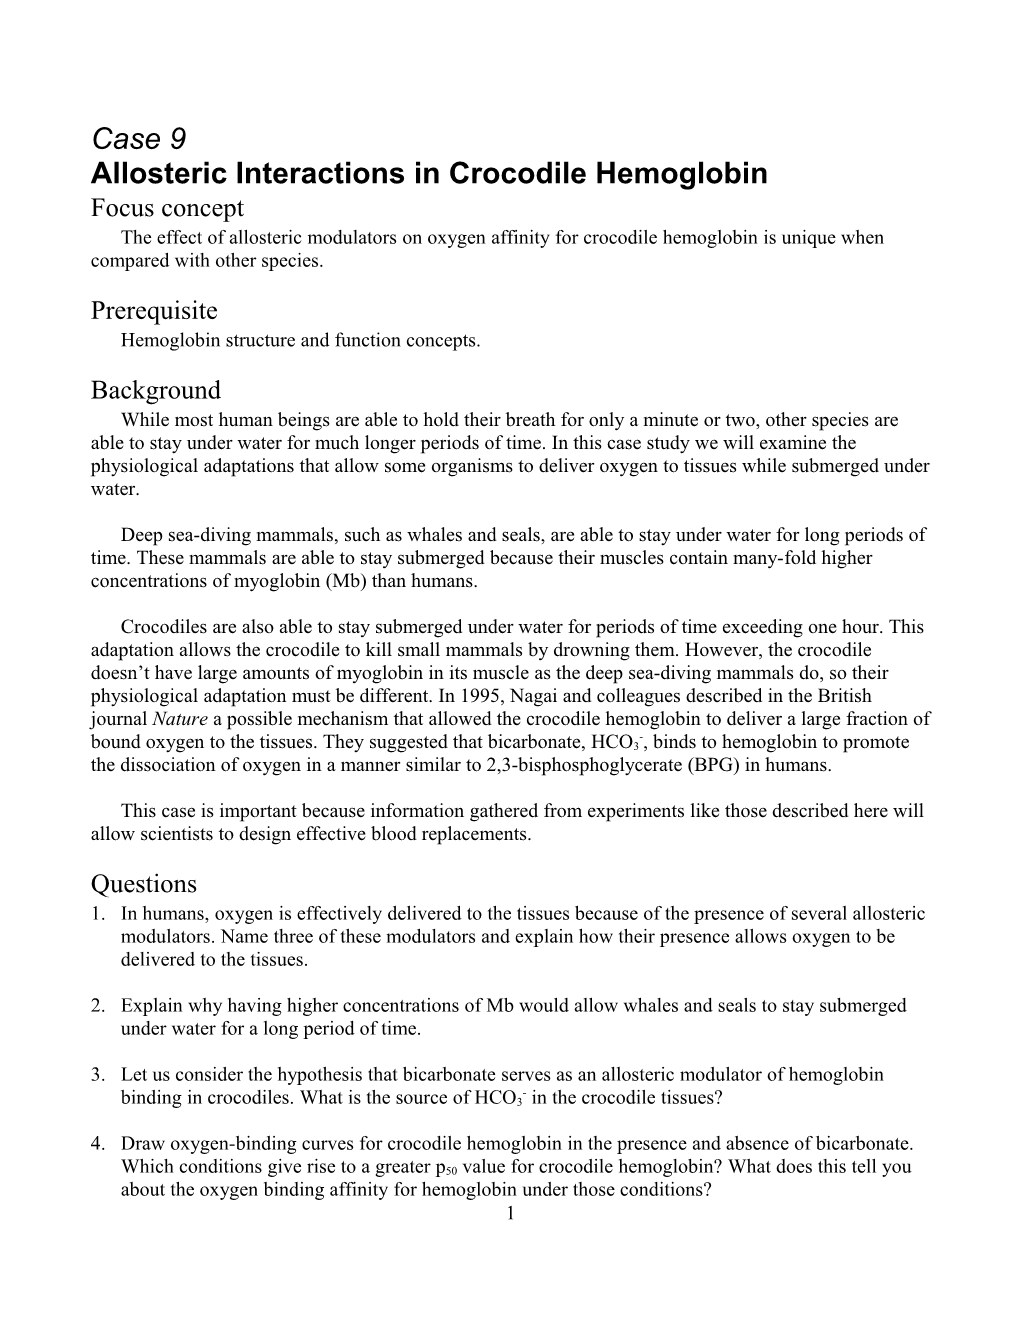 Allosteric Interactions in Crocodile Hemoglobin